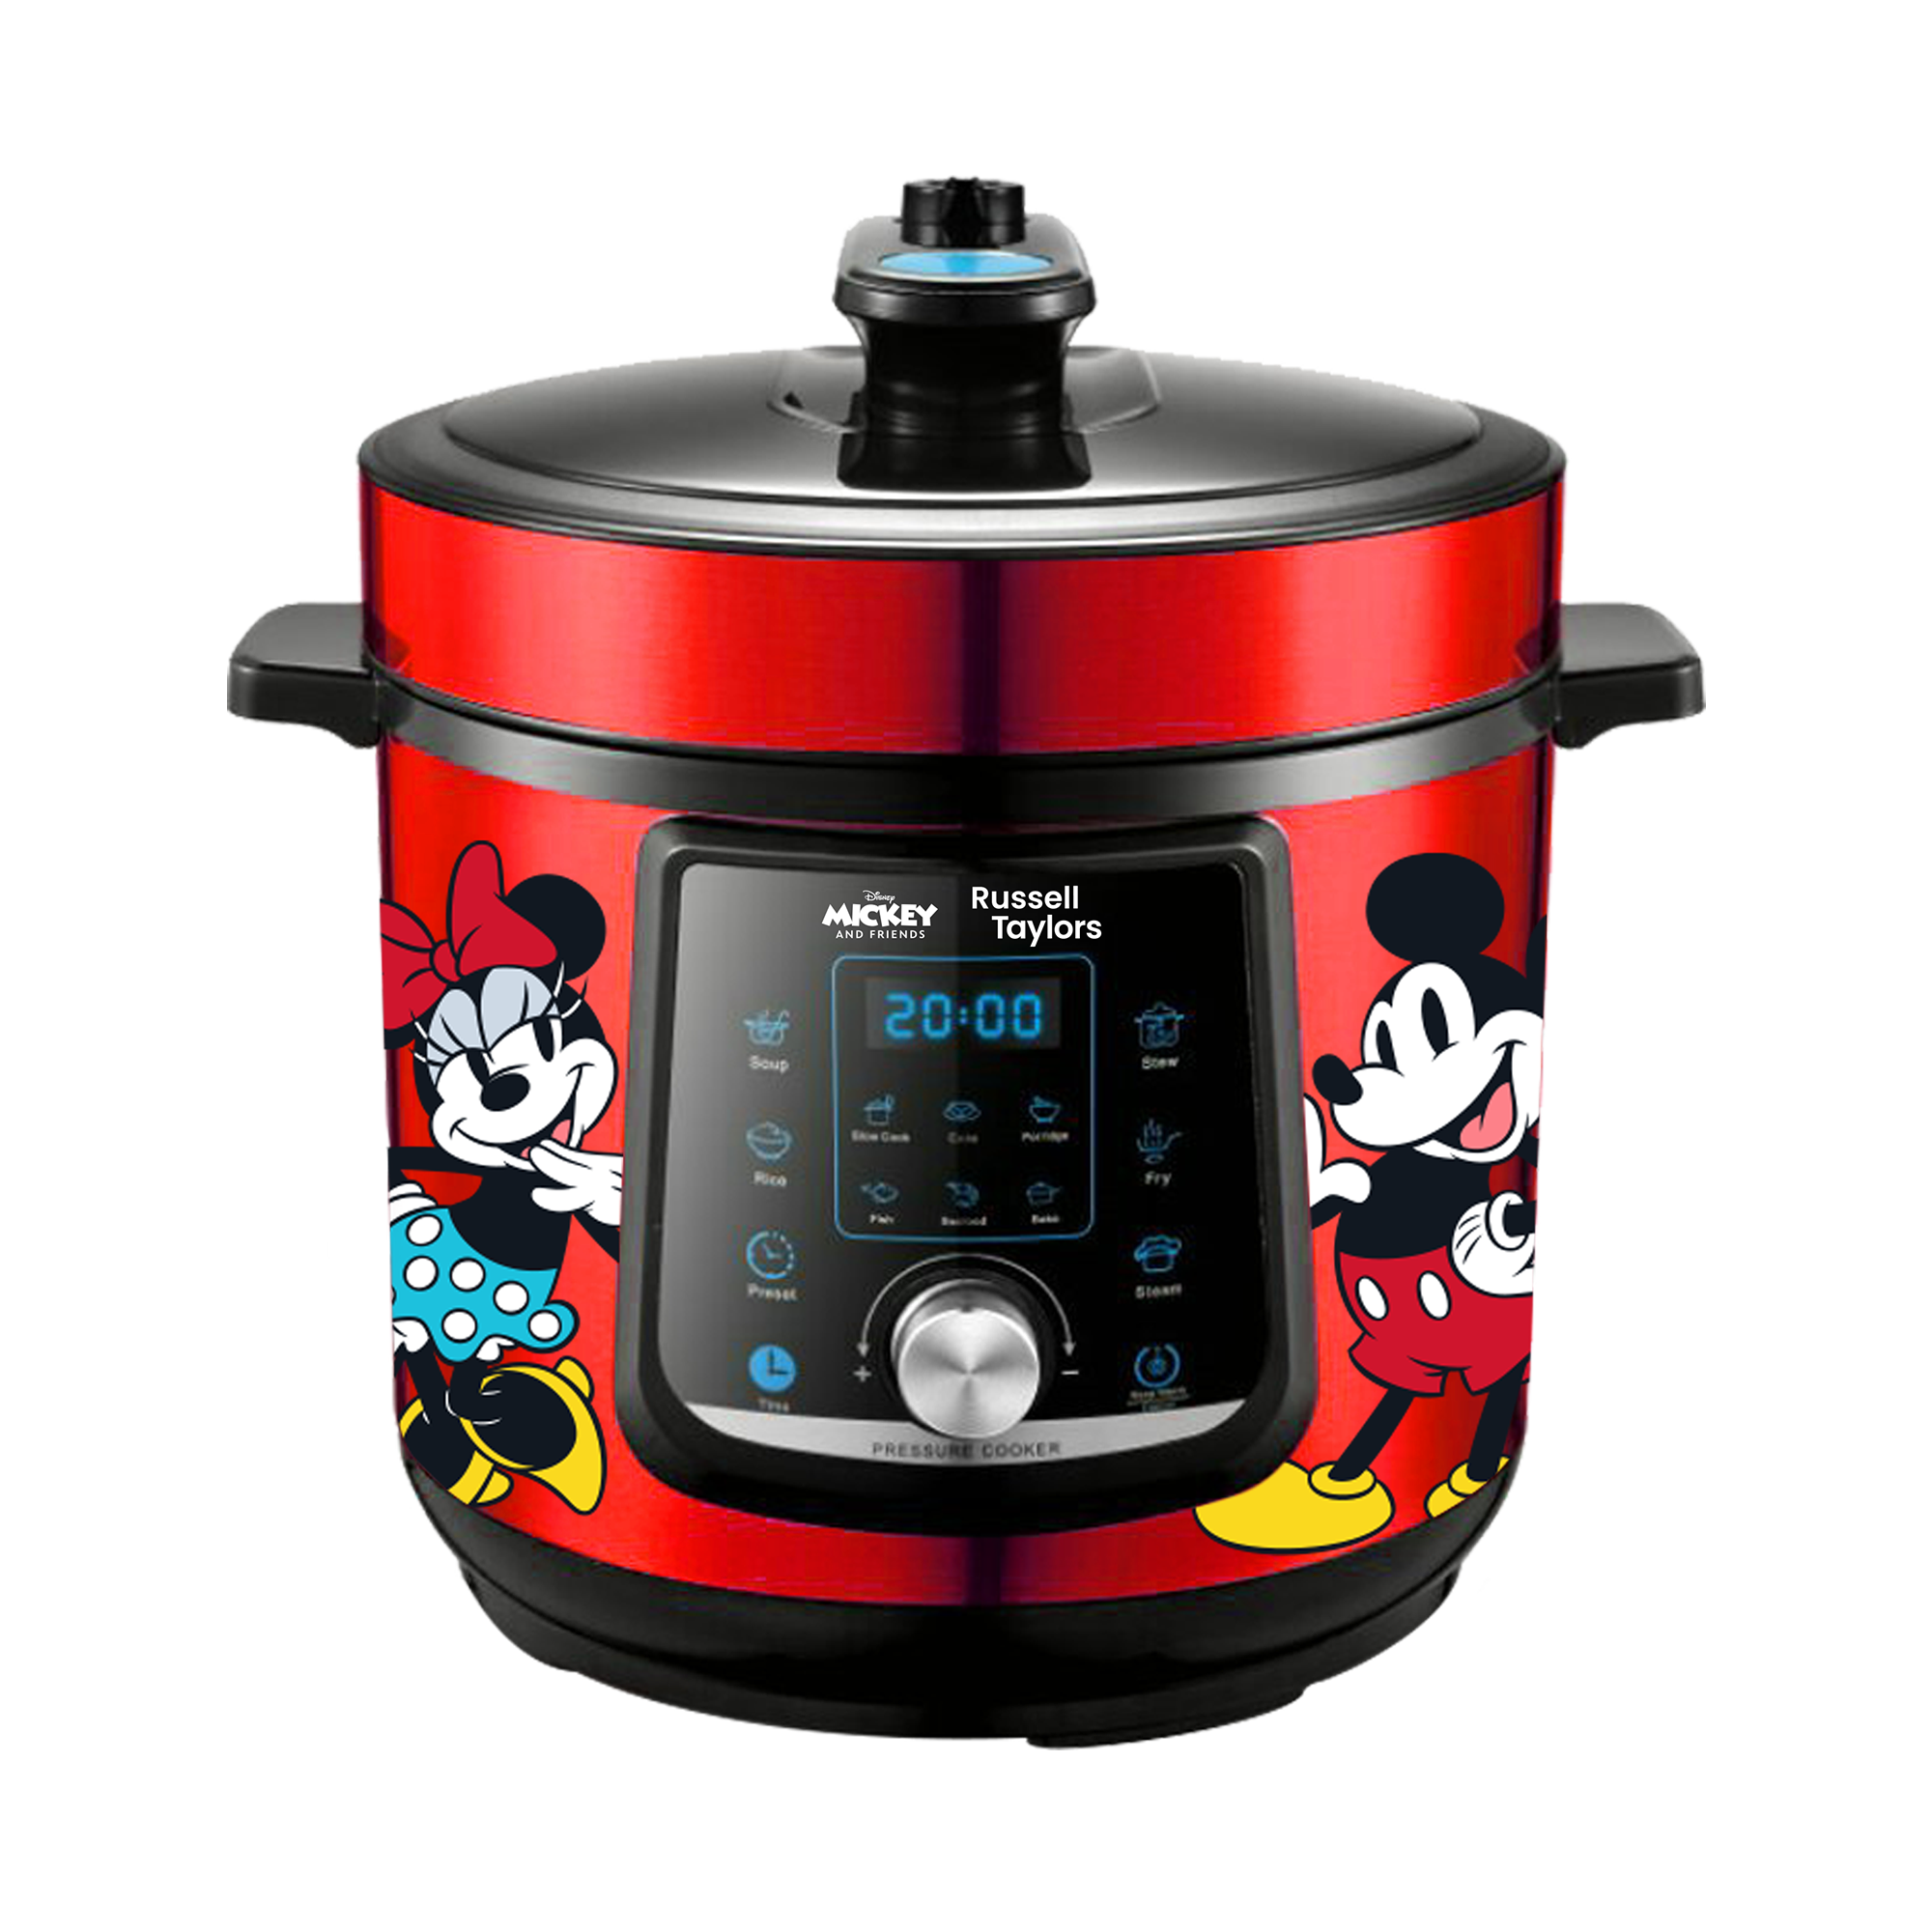 Disney Mickey & Friends 5-Quart Slow Cooker, White